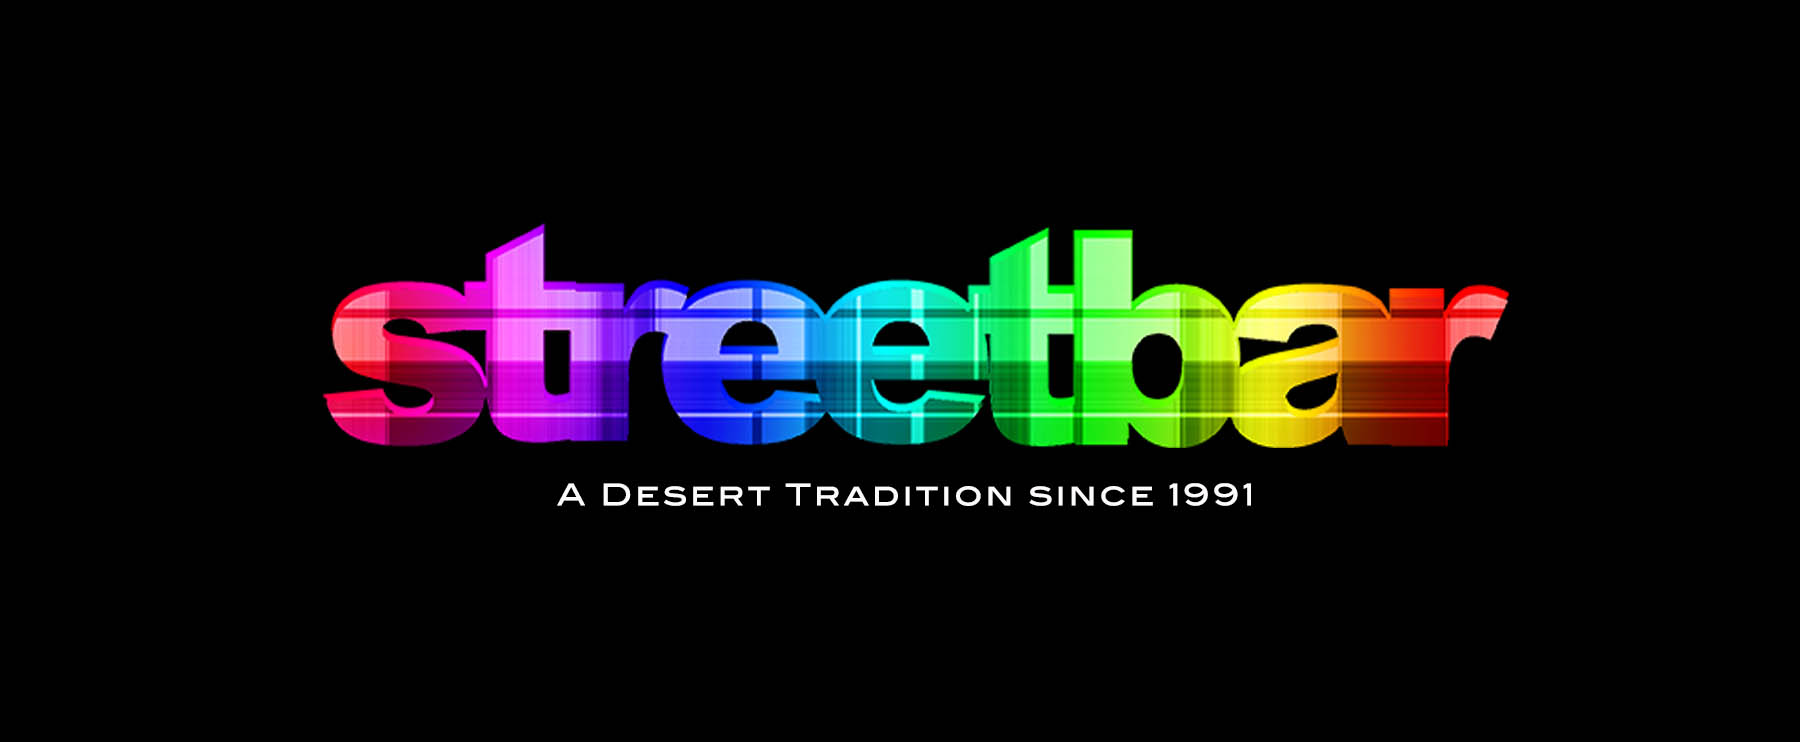 Streetbar Logo